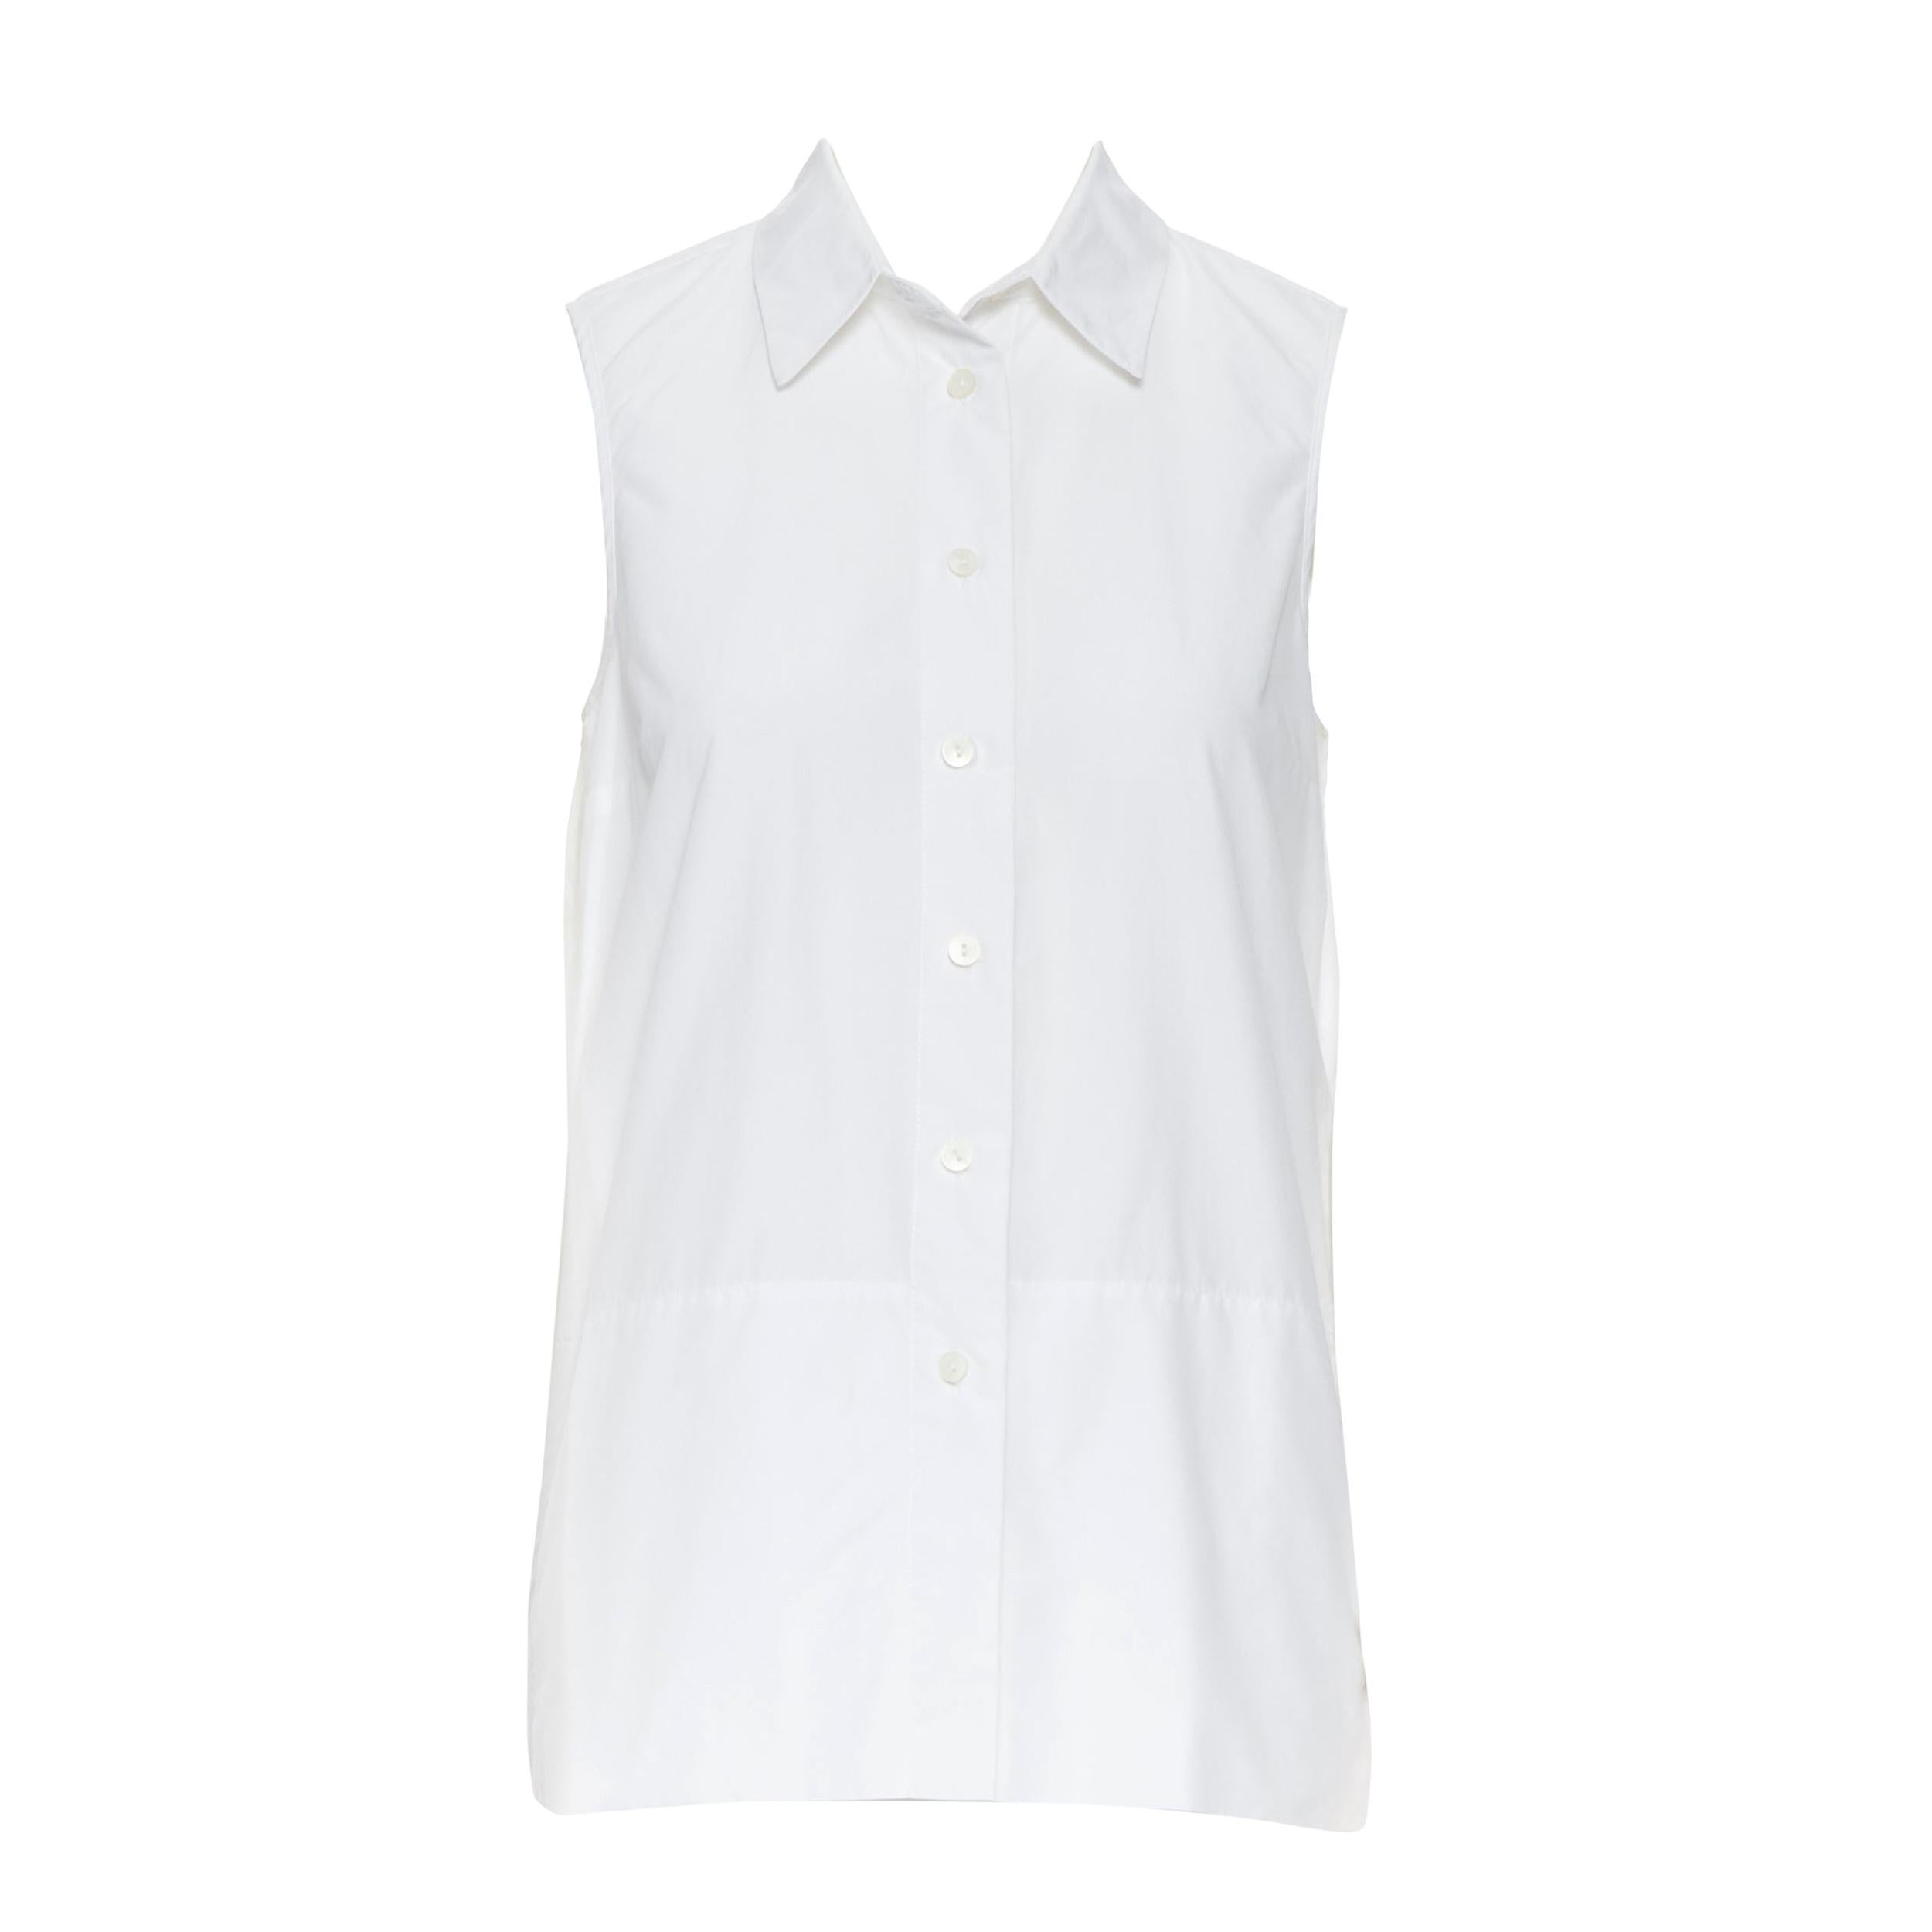 VICTORIA BECKHAM JEANS white cotton splt open back sleeveless shirt UK6